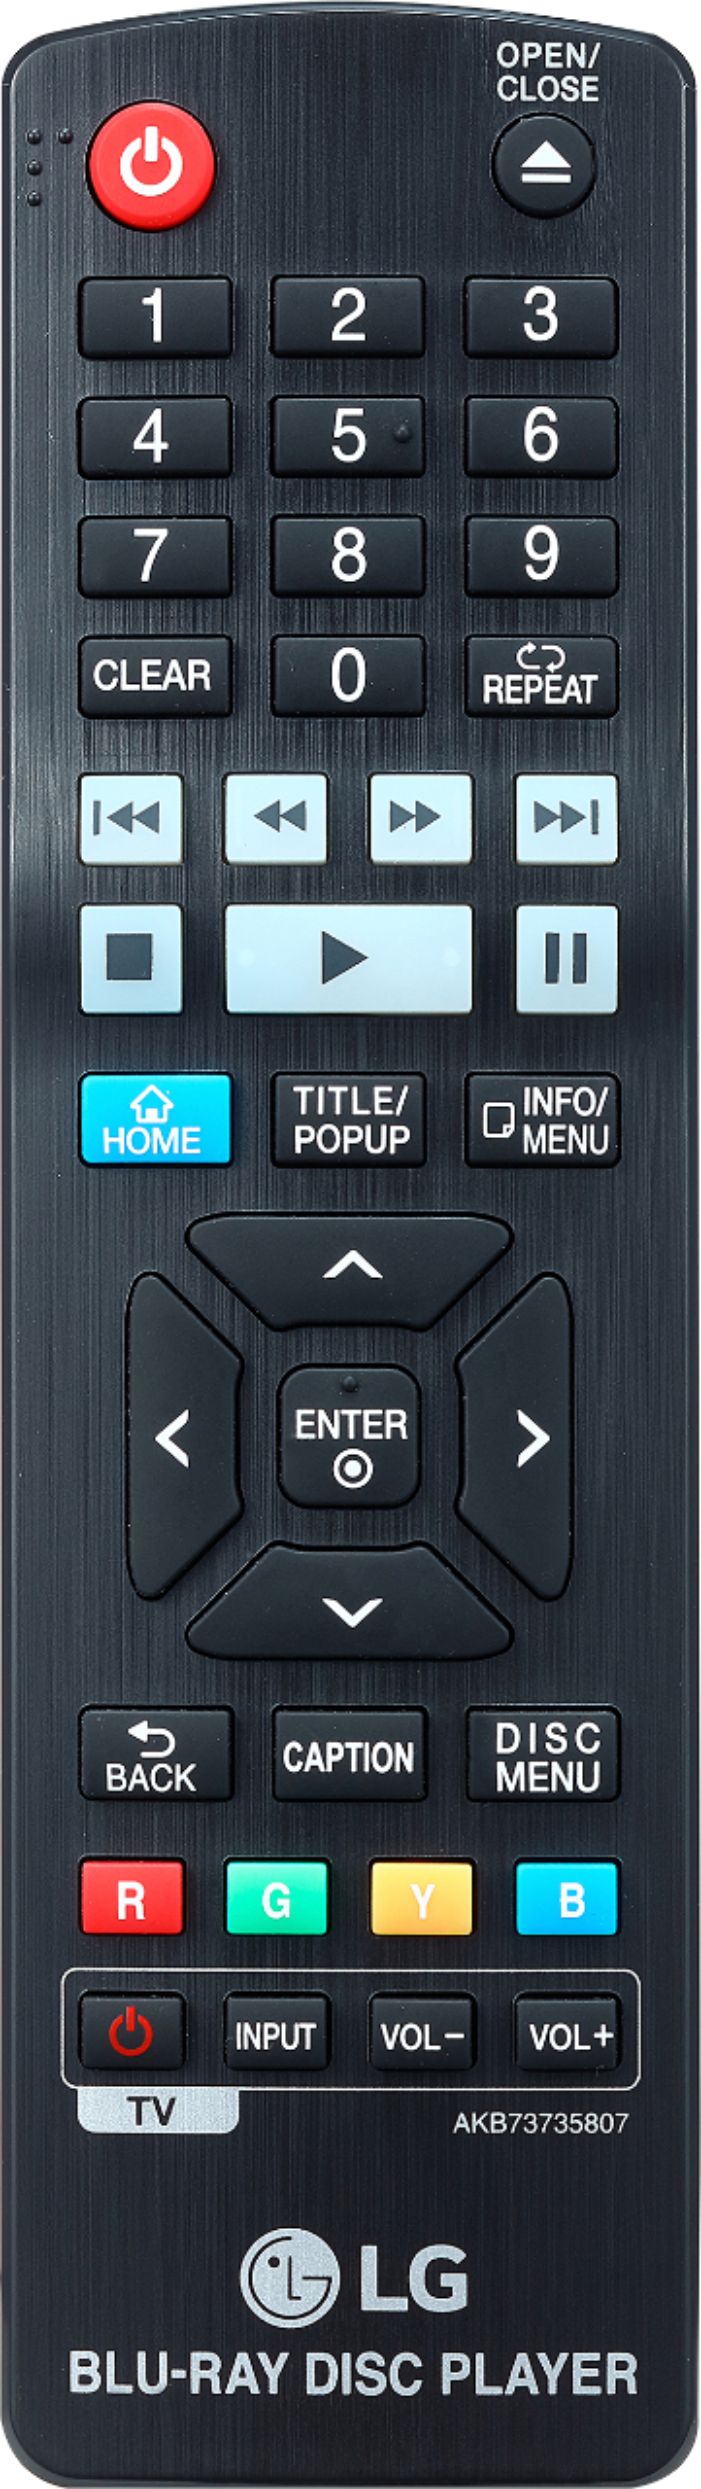 Lg Streaming 4k Ultra Hd Hi Res Audio Wi Fi Built In Blu Ray Player Black Ubk90 Best Buy